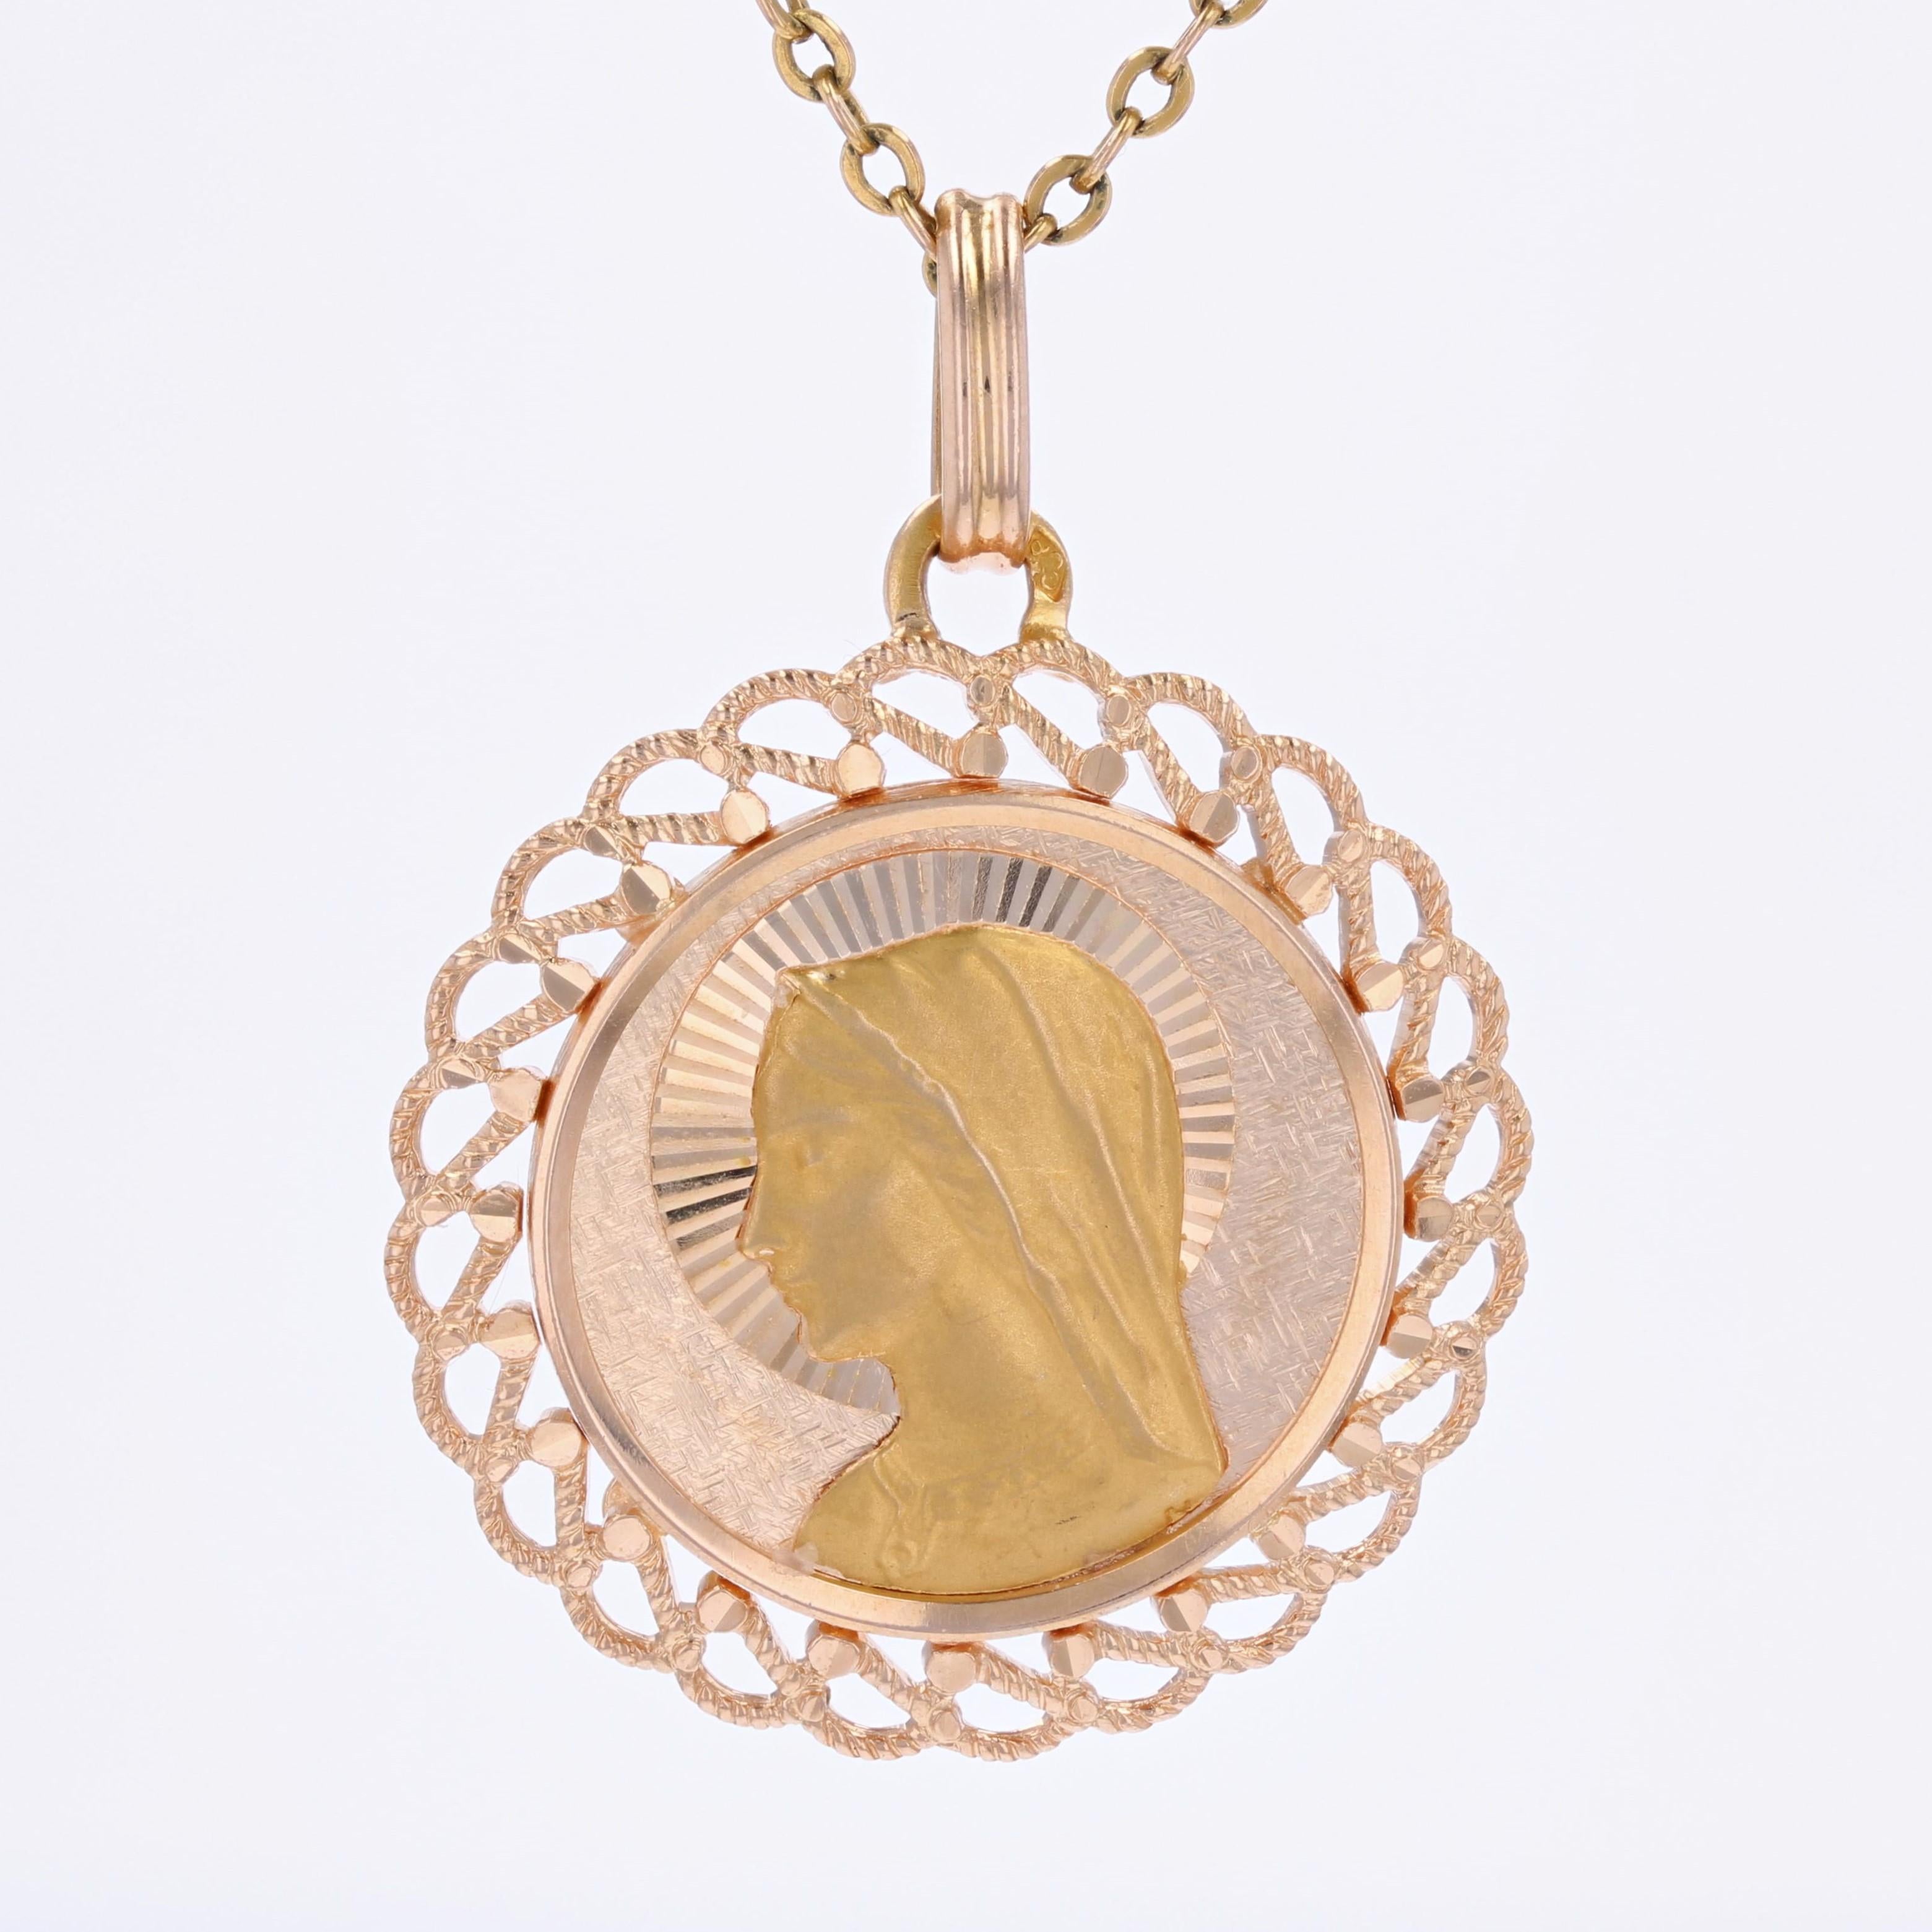 French 1960s 18 Karat Yellow Gold Virgin Mary Openwork Border Medal 1